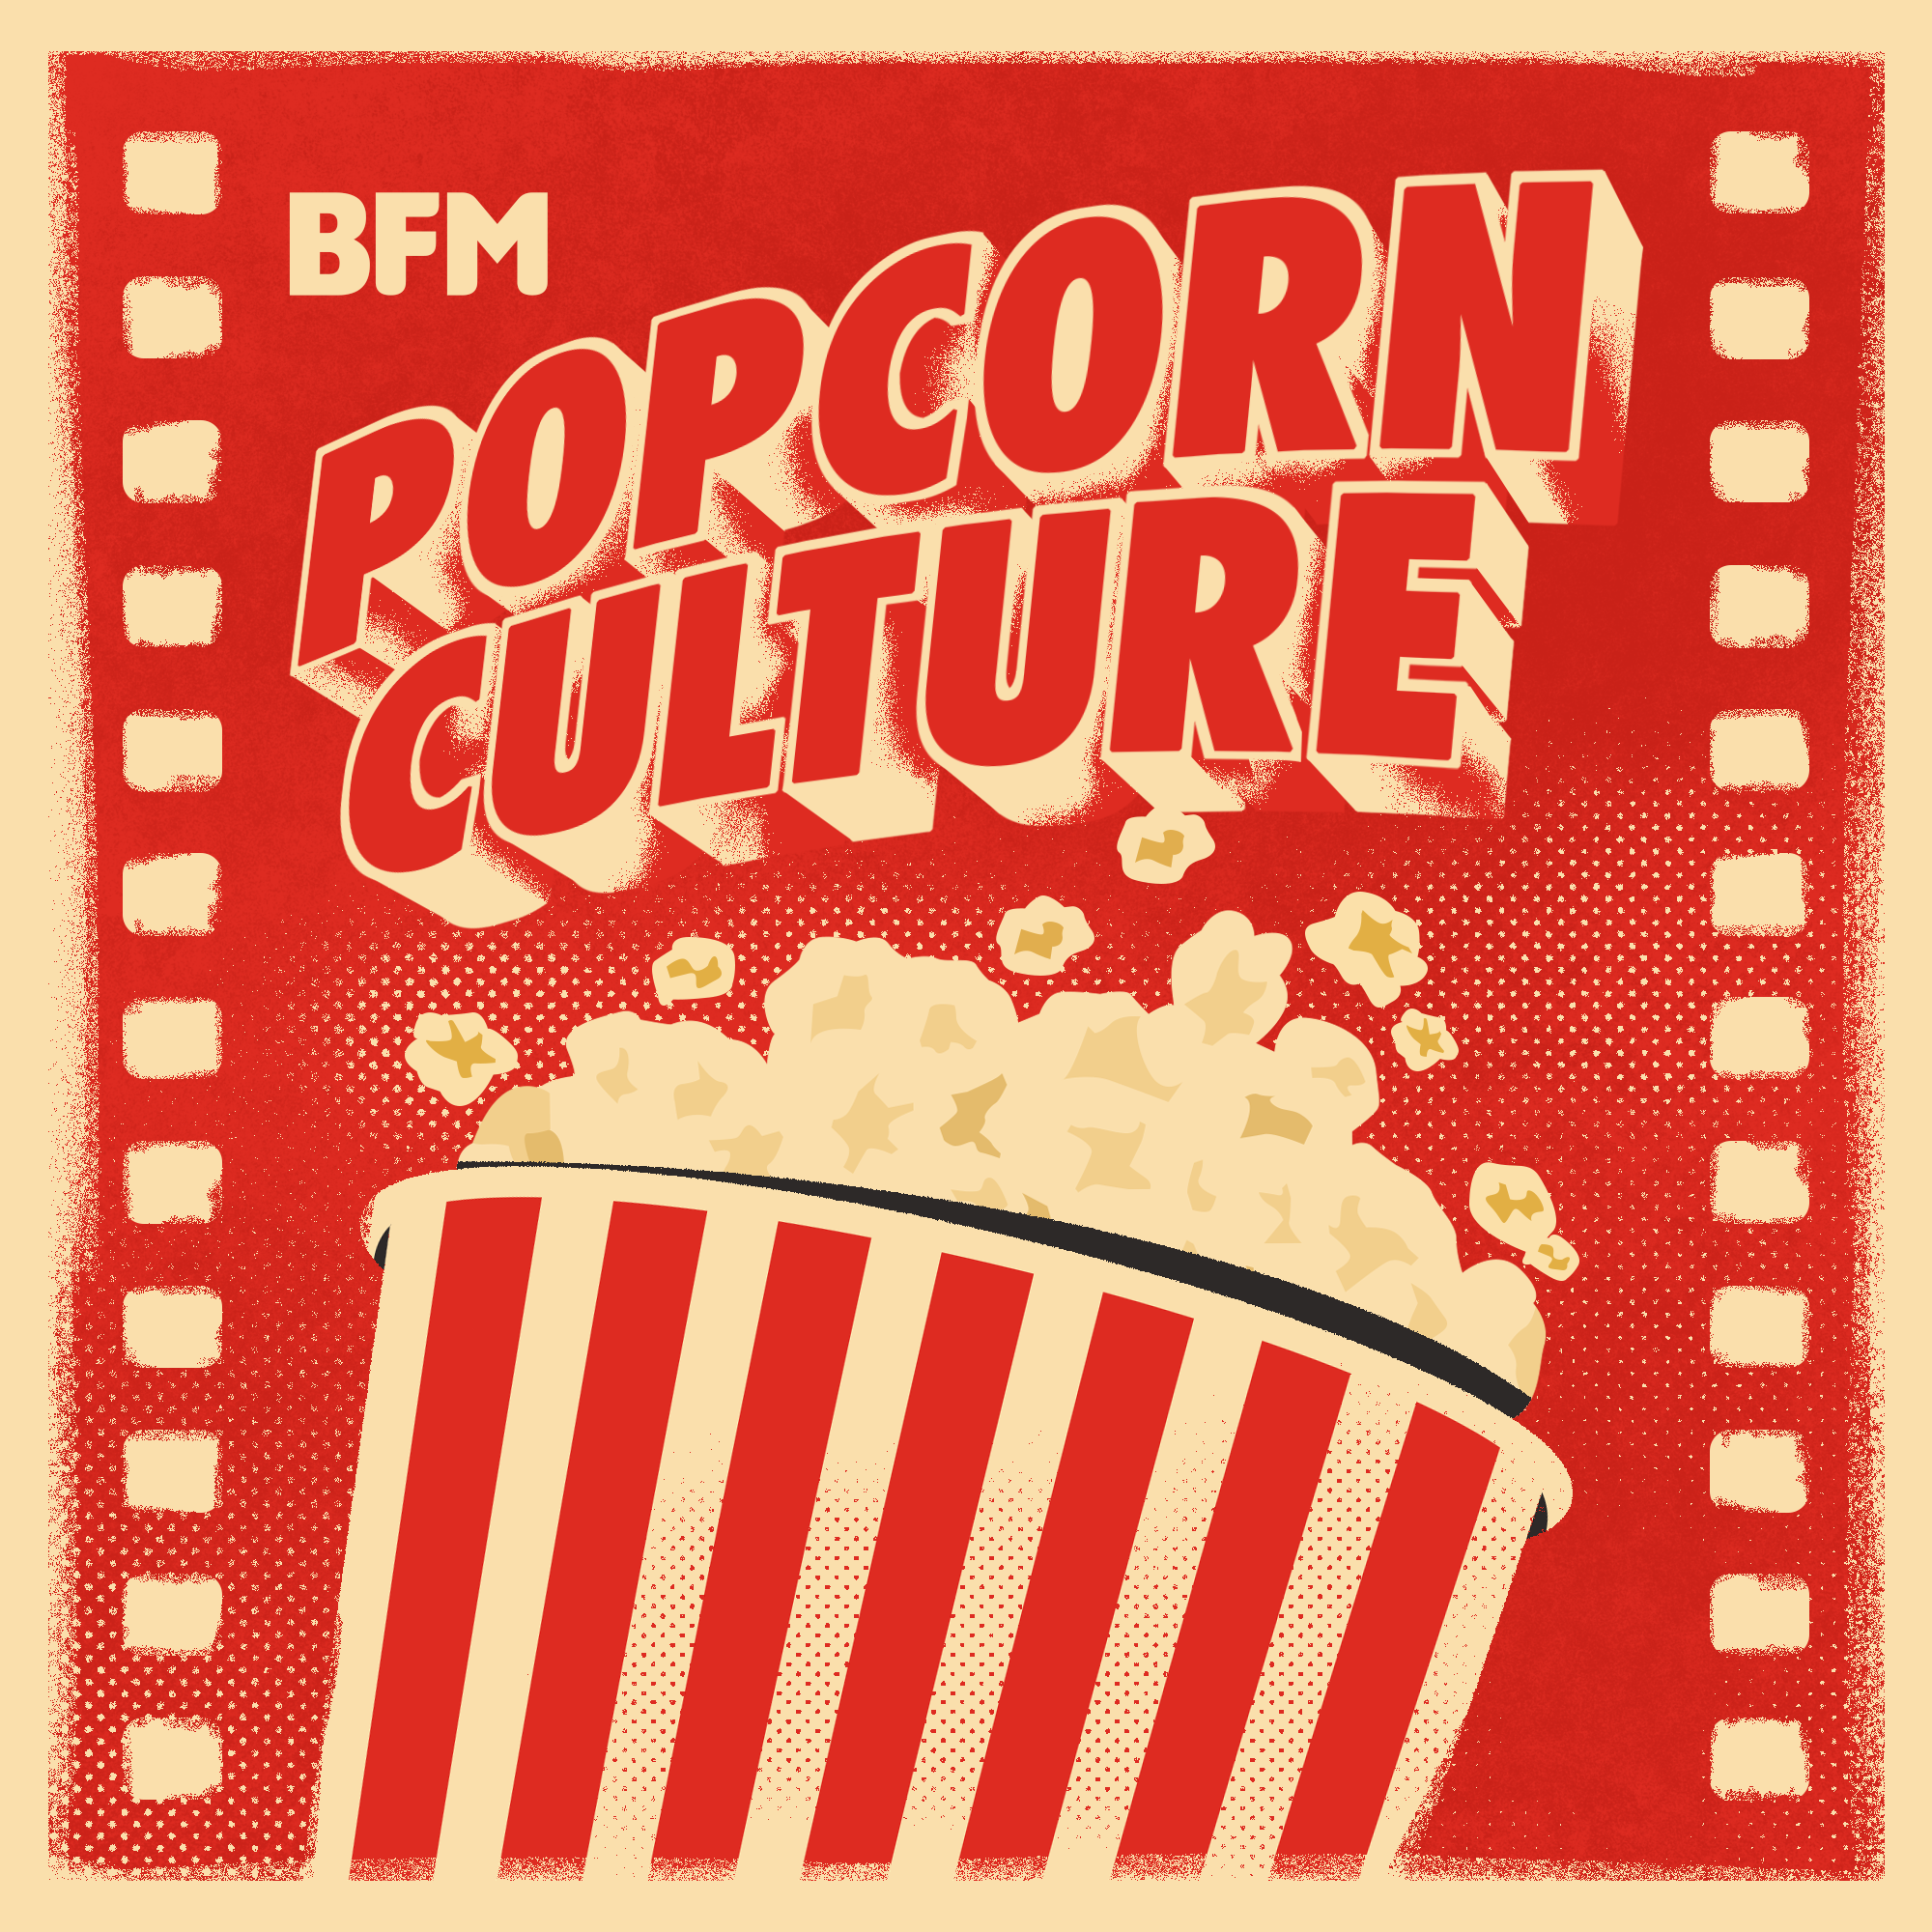 Popcorn Culture - Supercut: Of Memes and Movies